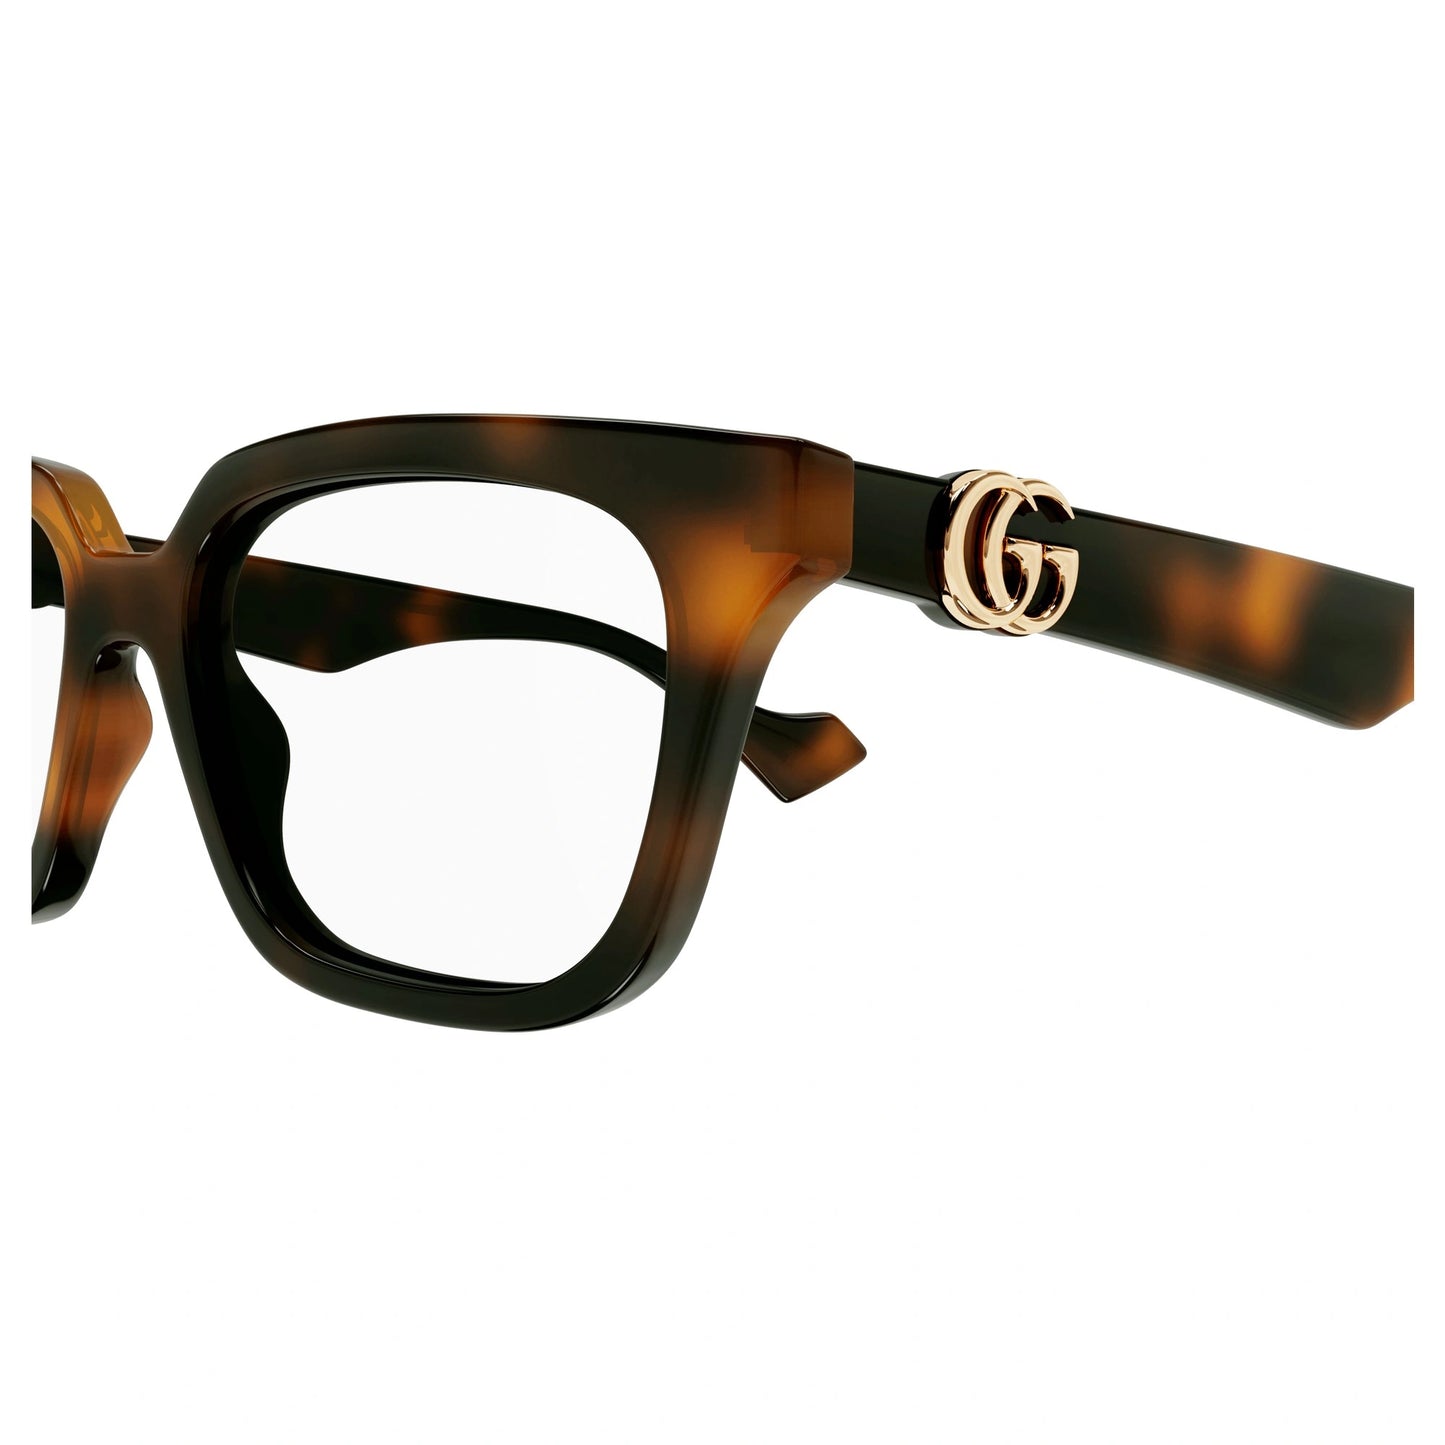 Gucci GG1536o-006 53mm New Eyeglasses